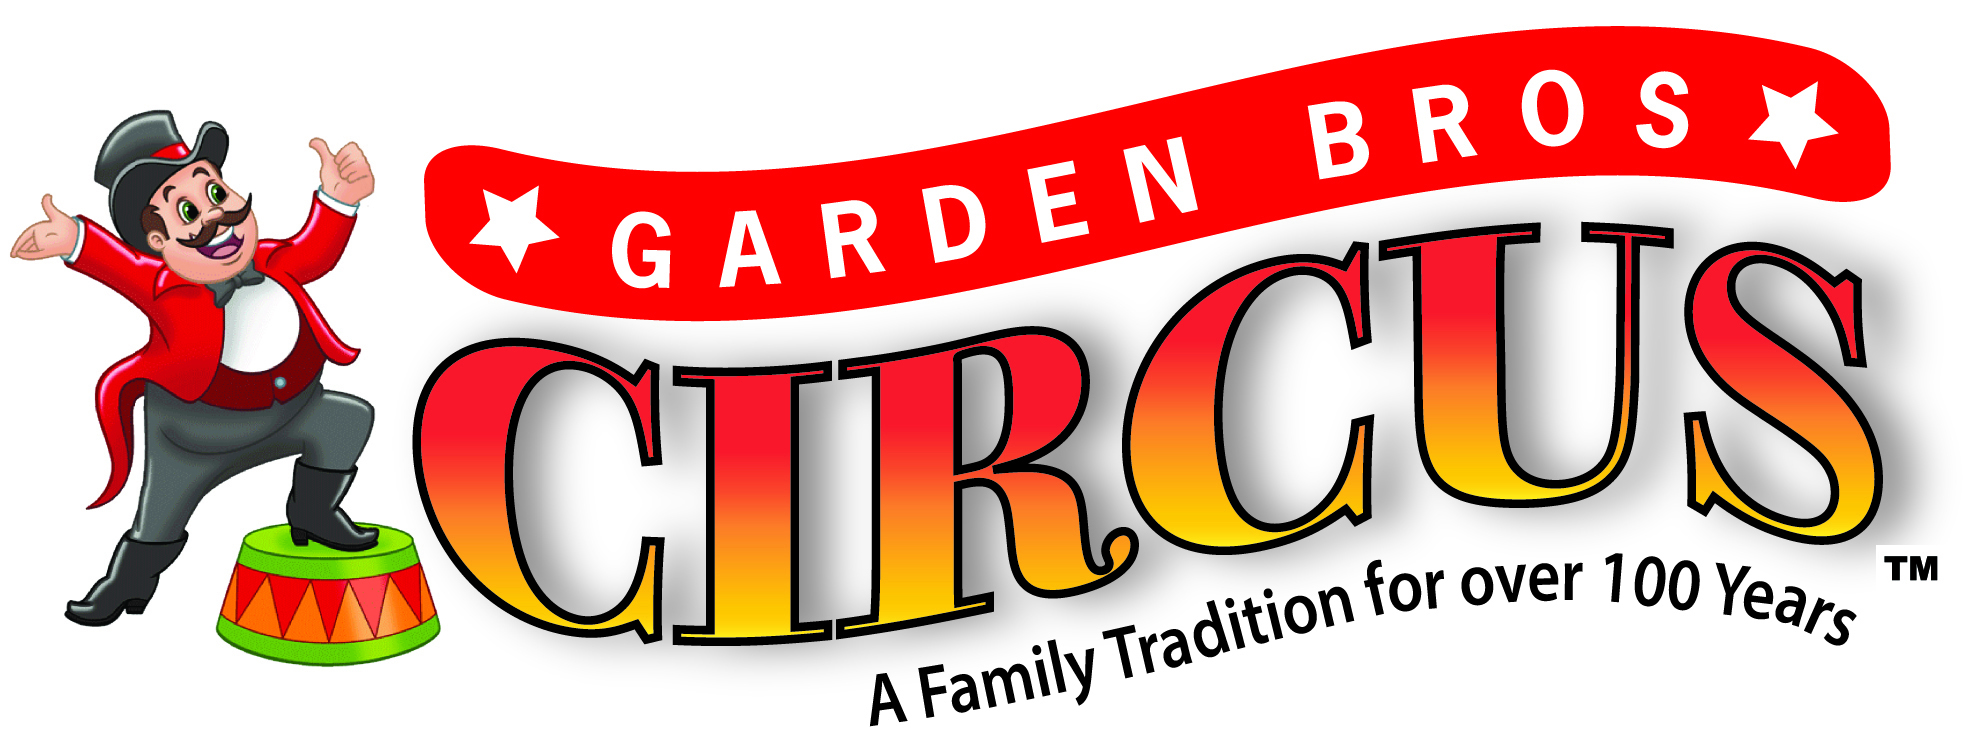 Garden Bros Circus, Manatee, Florida, United States